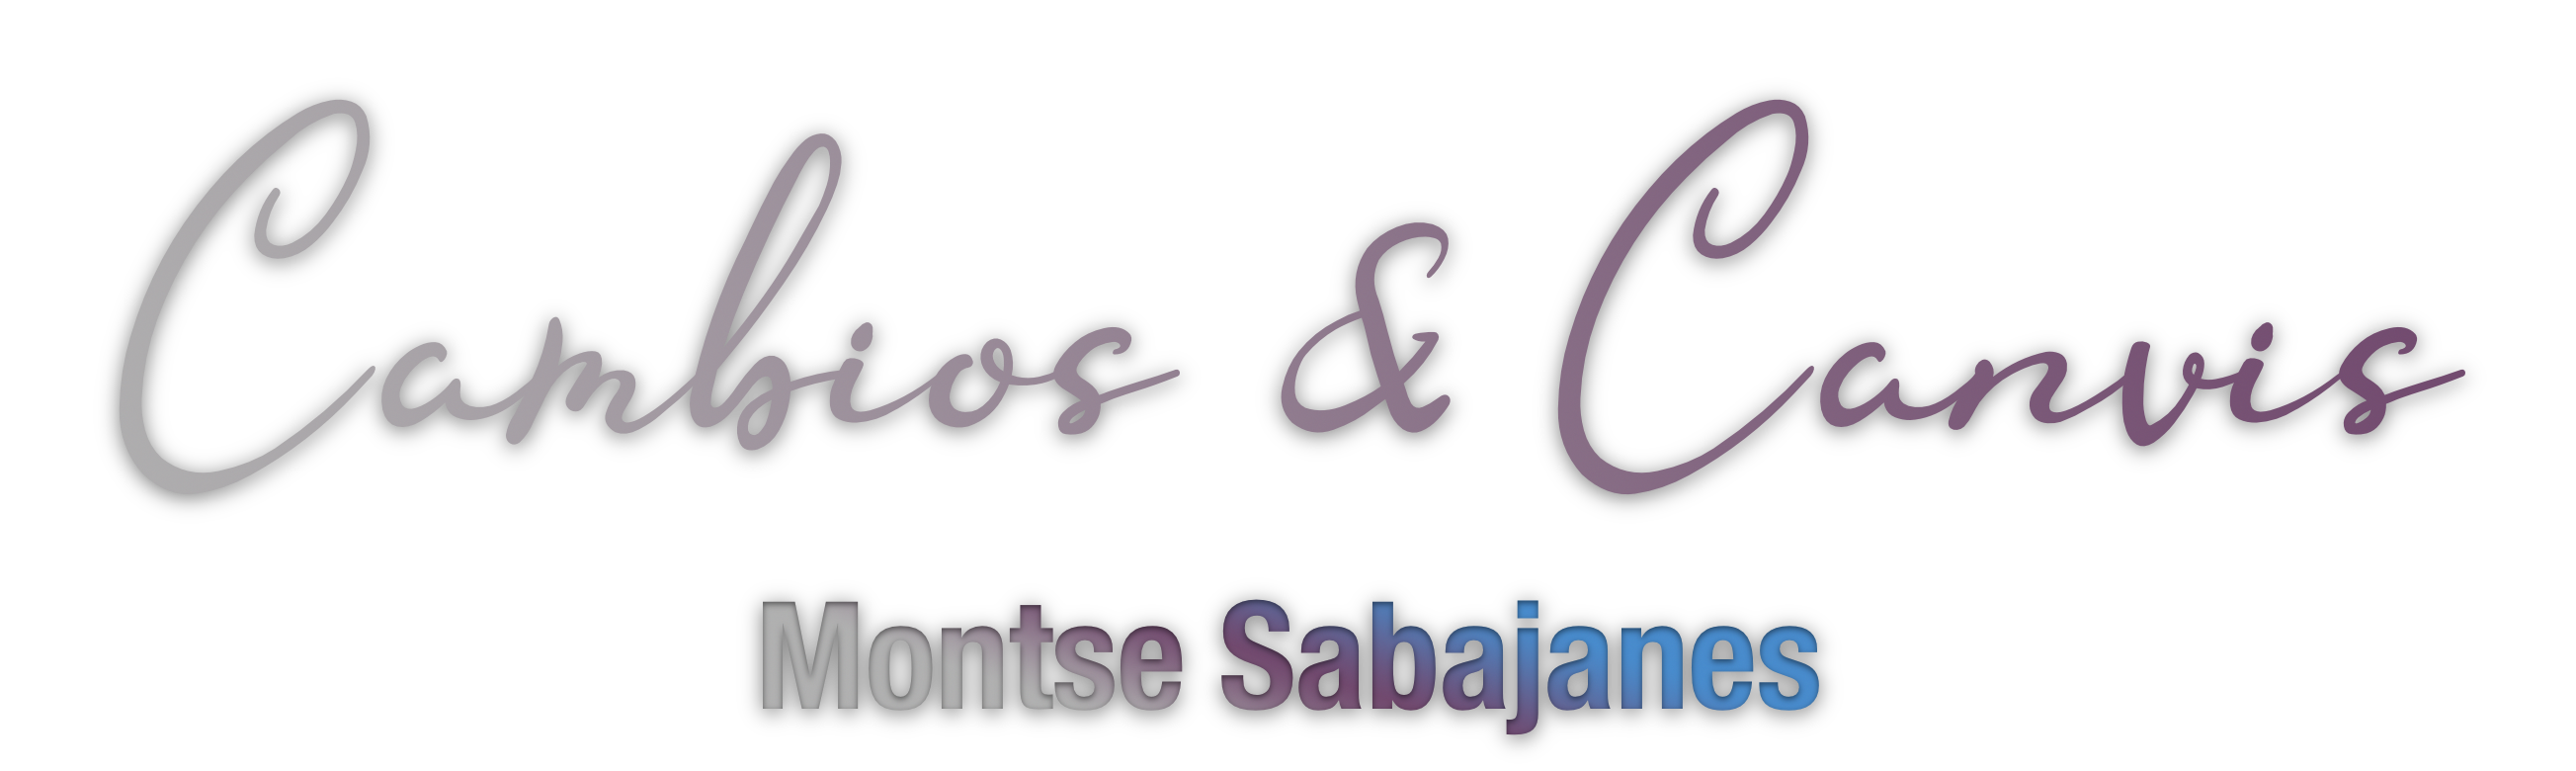 Montse Sabajanes